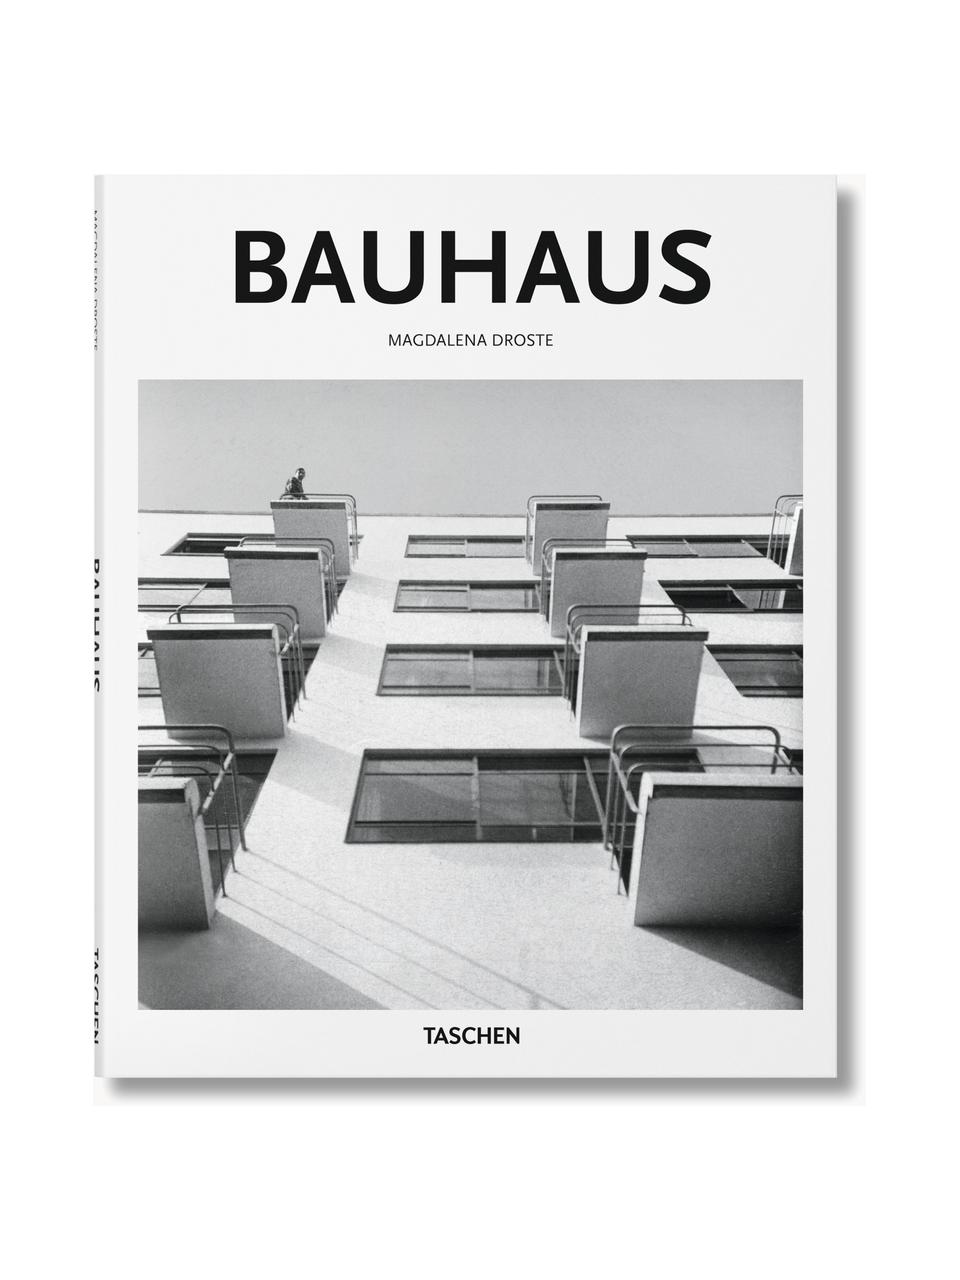 Libro illustrato Bauhaus, Carta, cornice rigida, Bauhaus, Larg. 21 x Alt. 26 cm